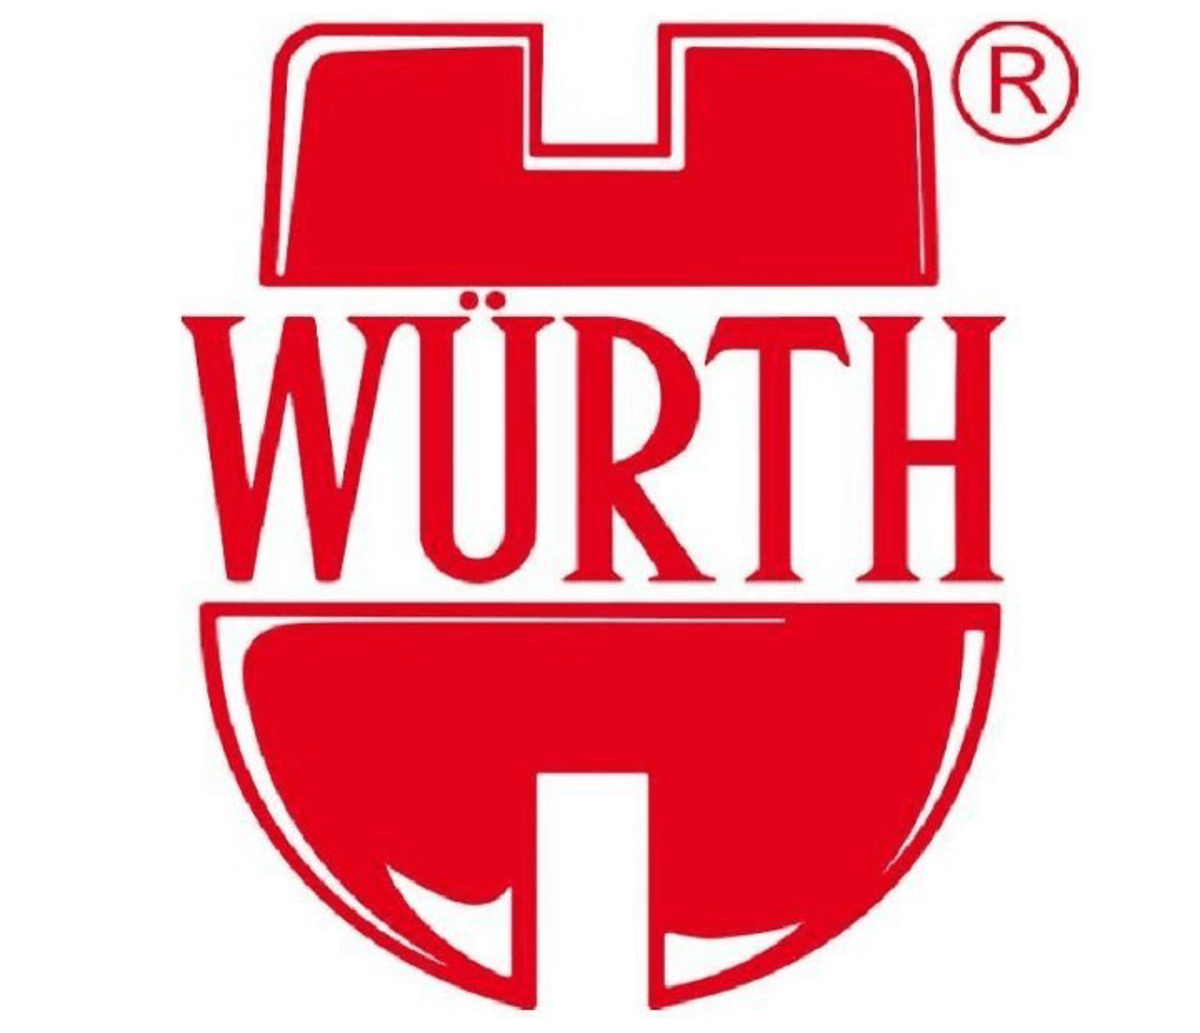 The original Würth logo from 1956